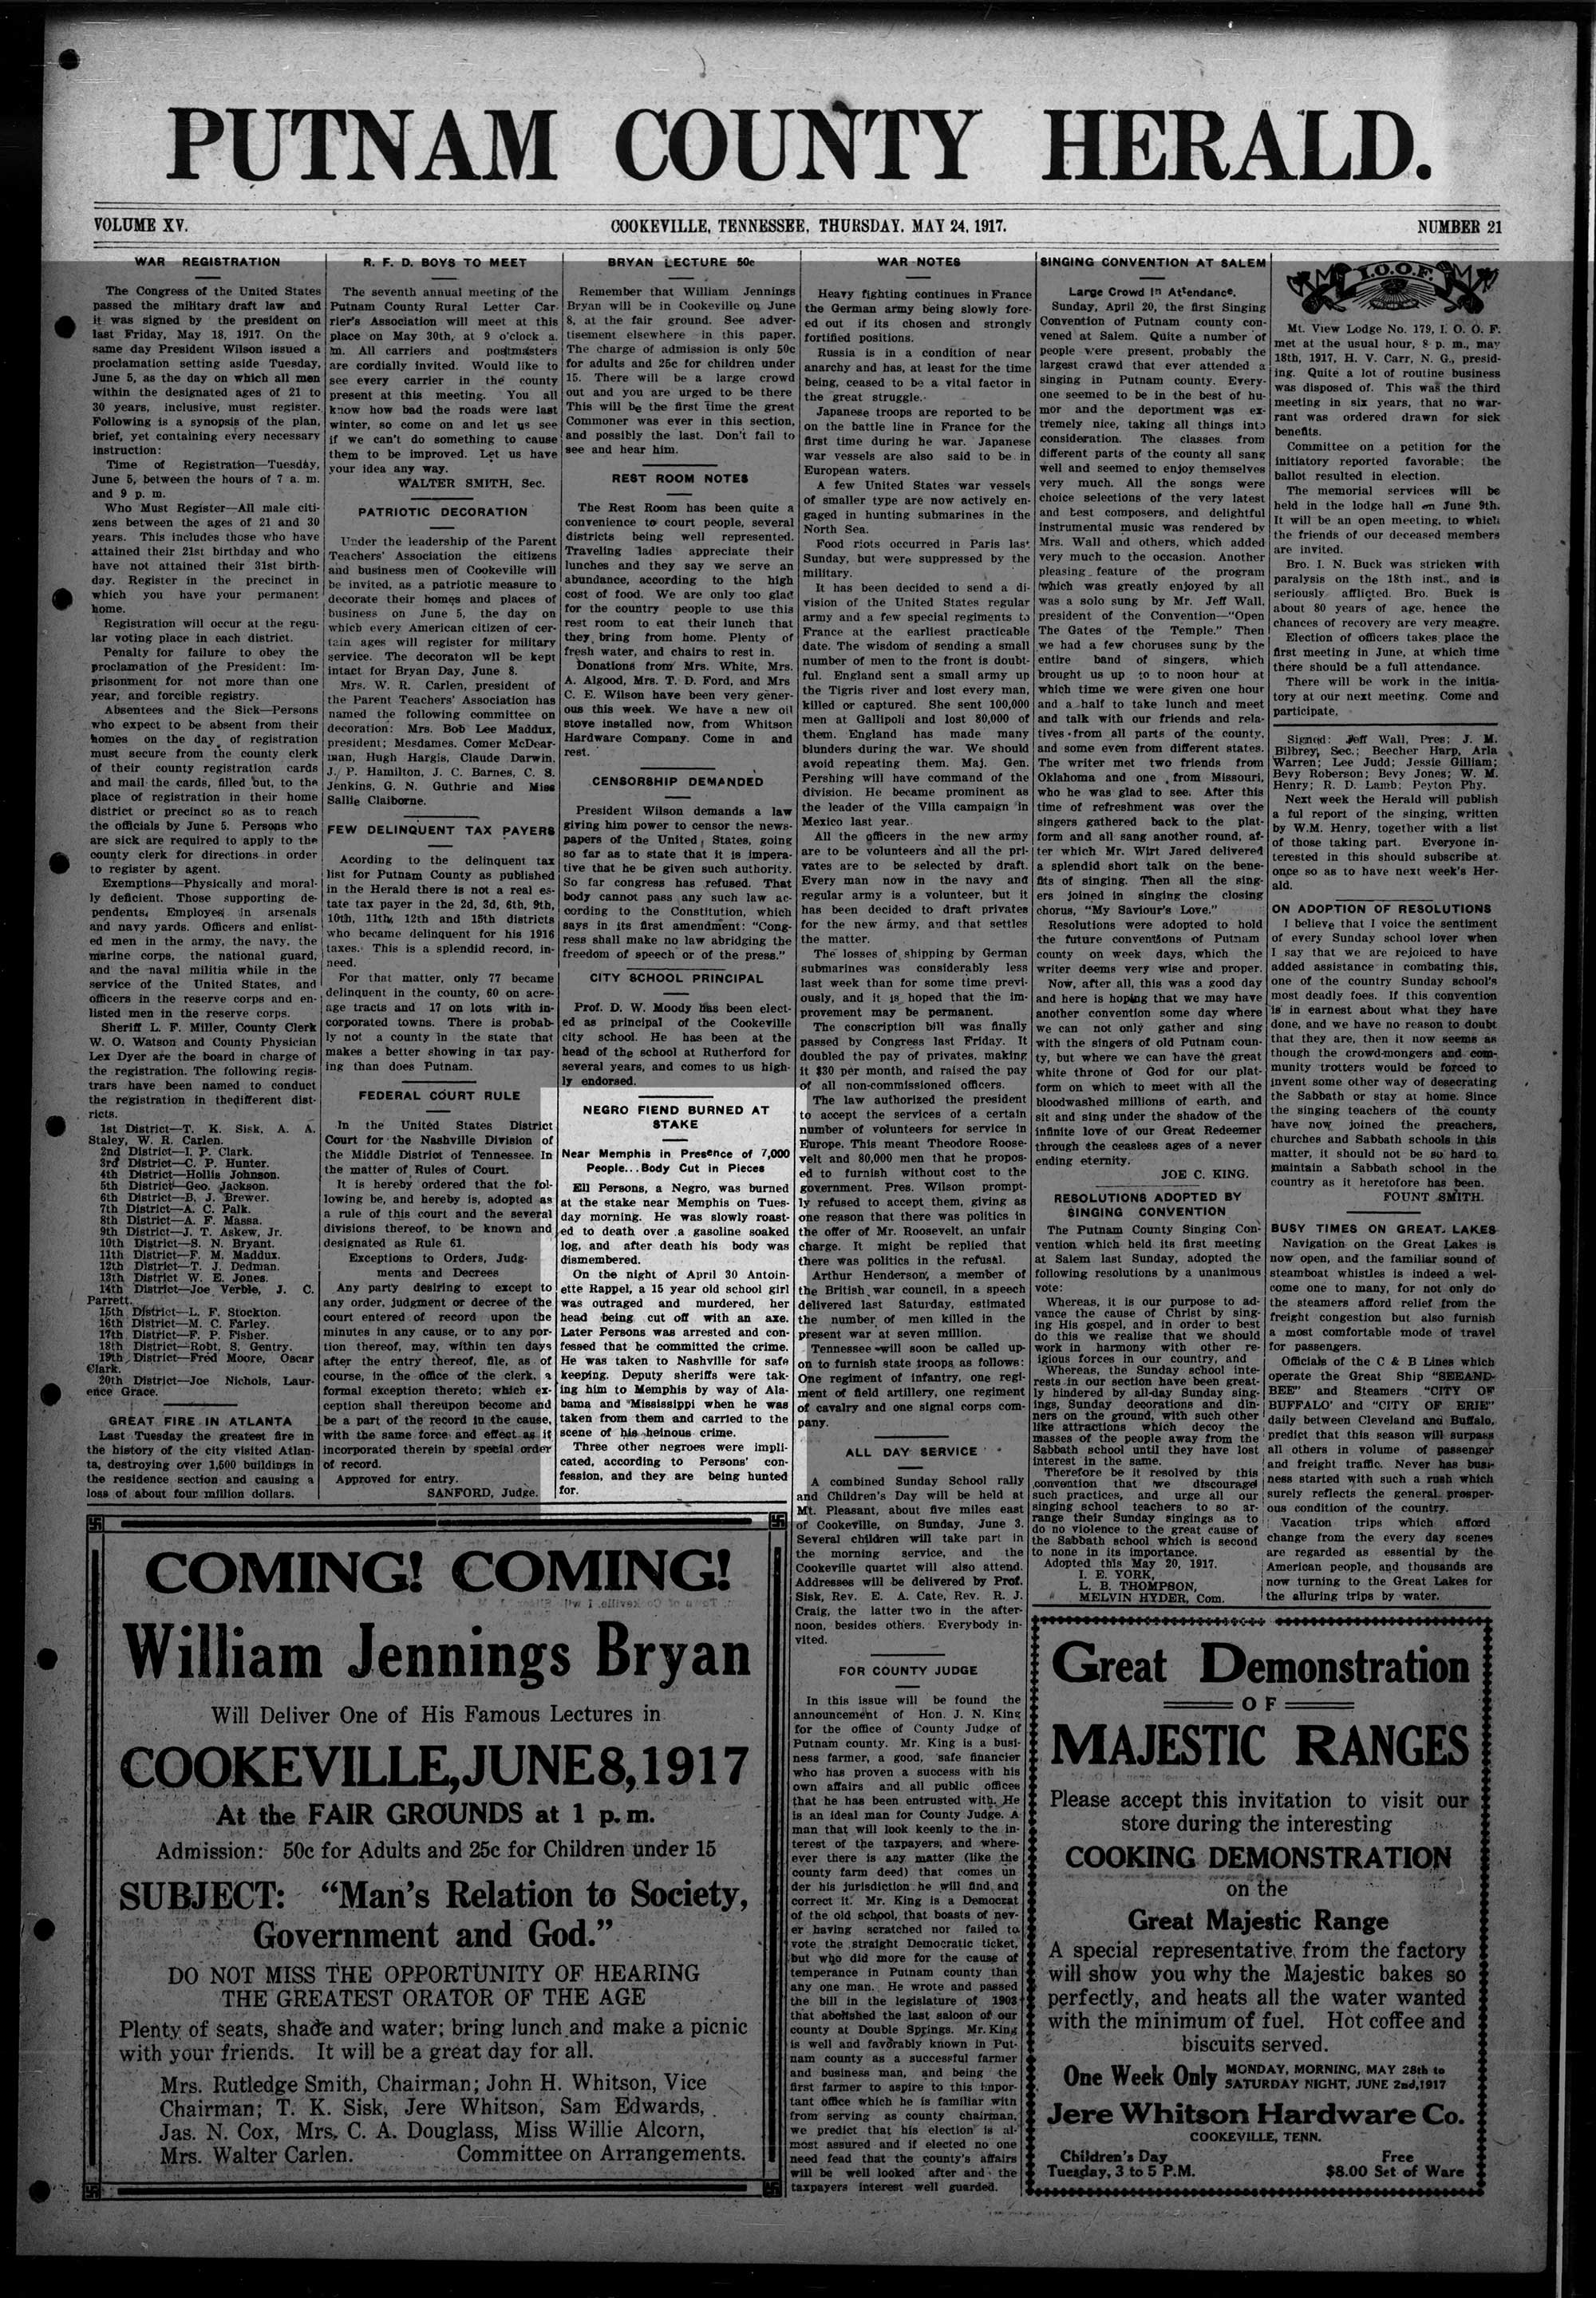 Putnam County Herald, 5/24/1917